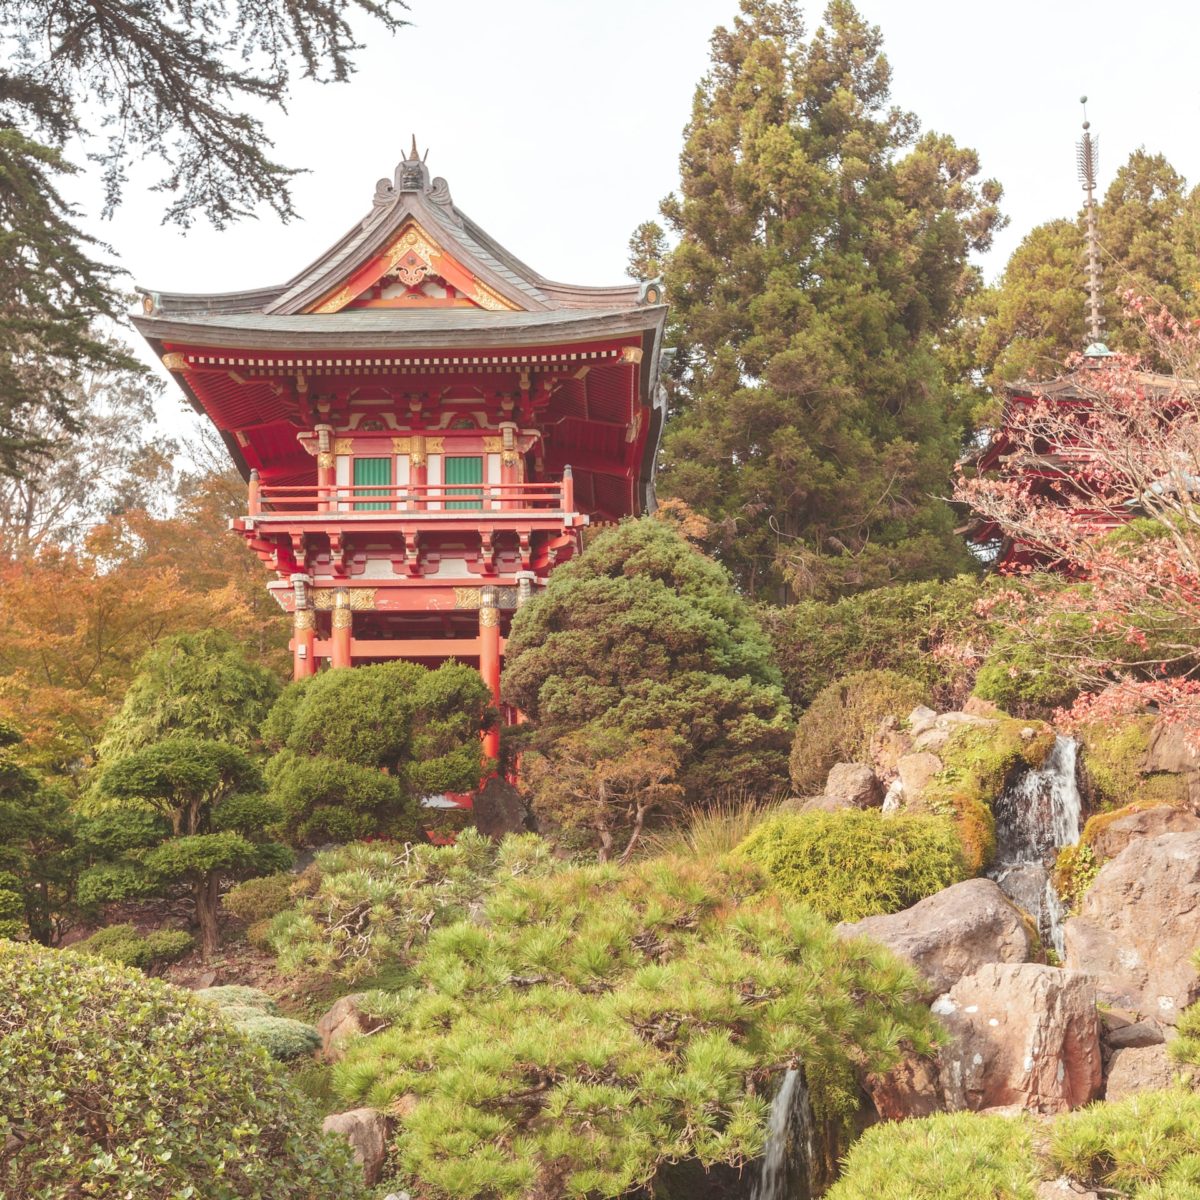 Guide to Visiting the Japanese Tea Garden in San Francisco